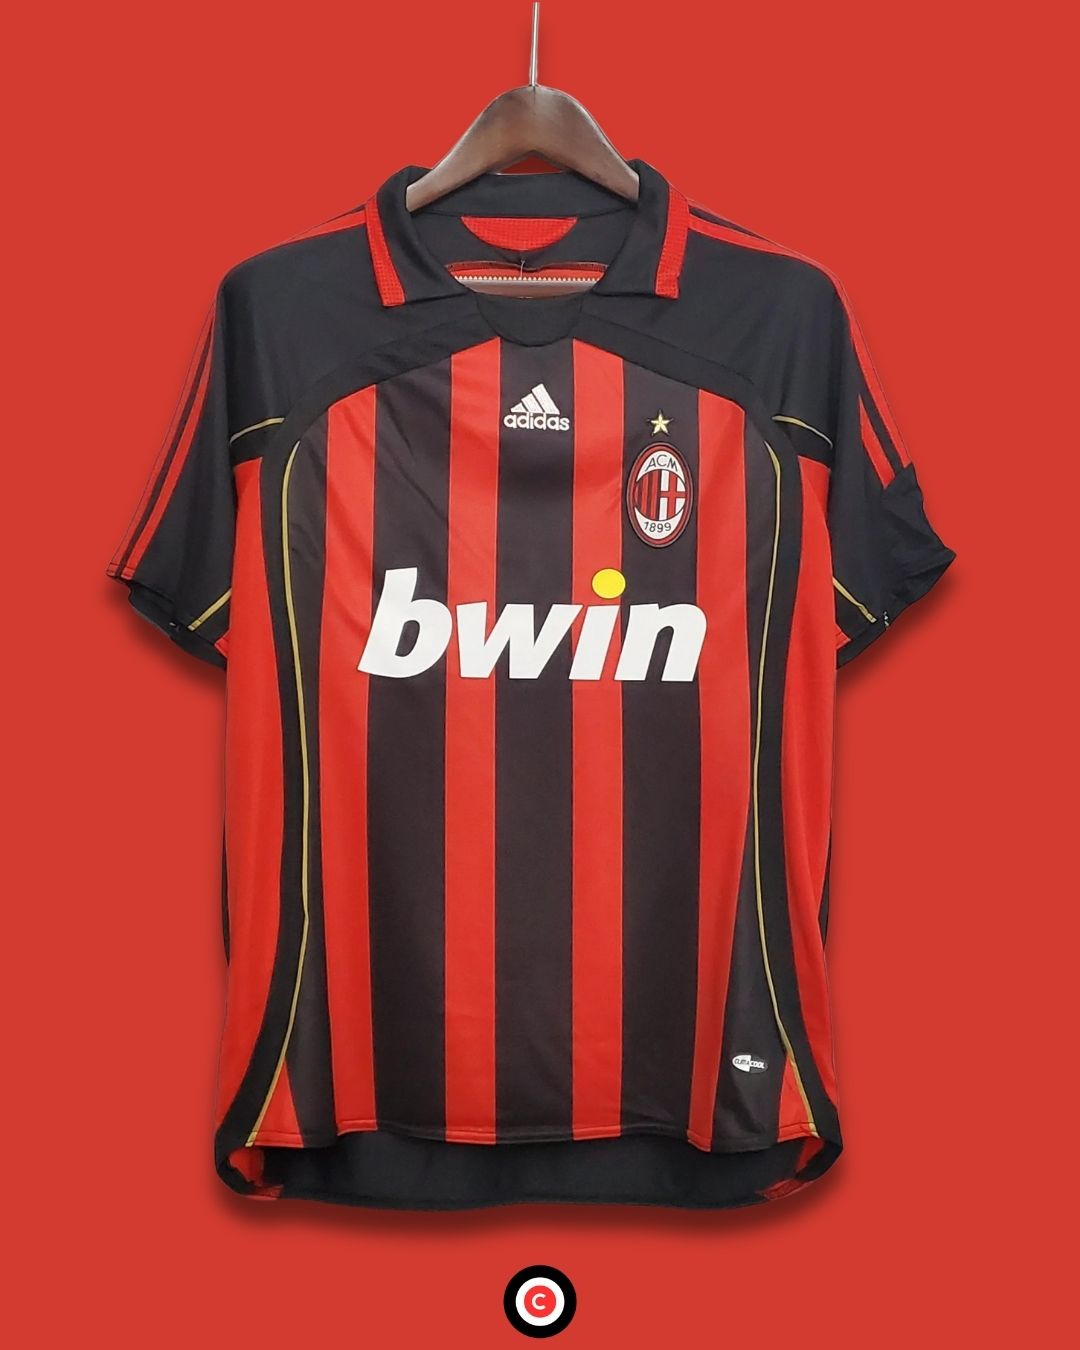 AC Milan 06/07 (Home Kit) - Premium  from CatenaccioDesigns - Just €60.99! Shop now at CatenaccioDesigns